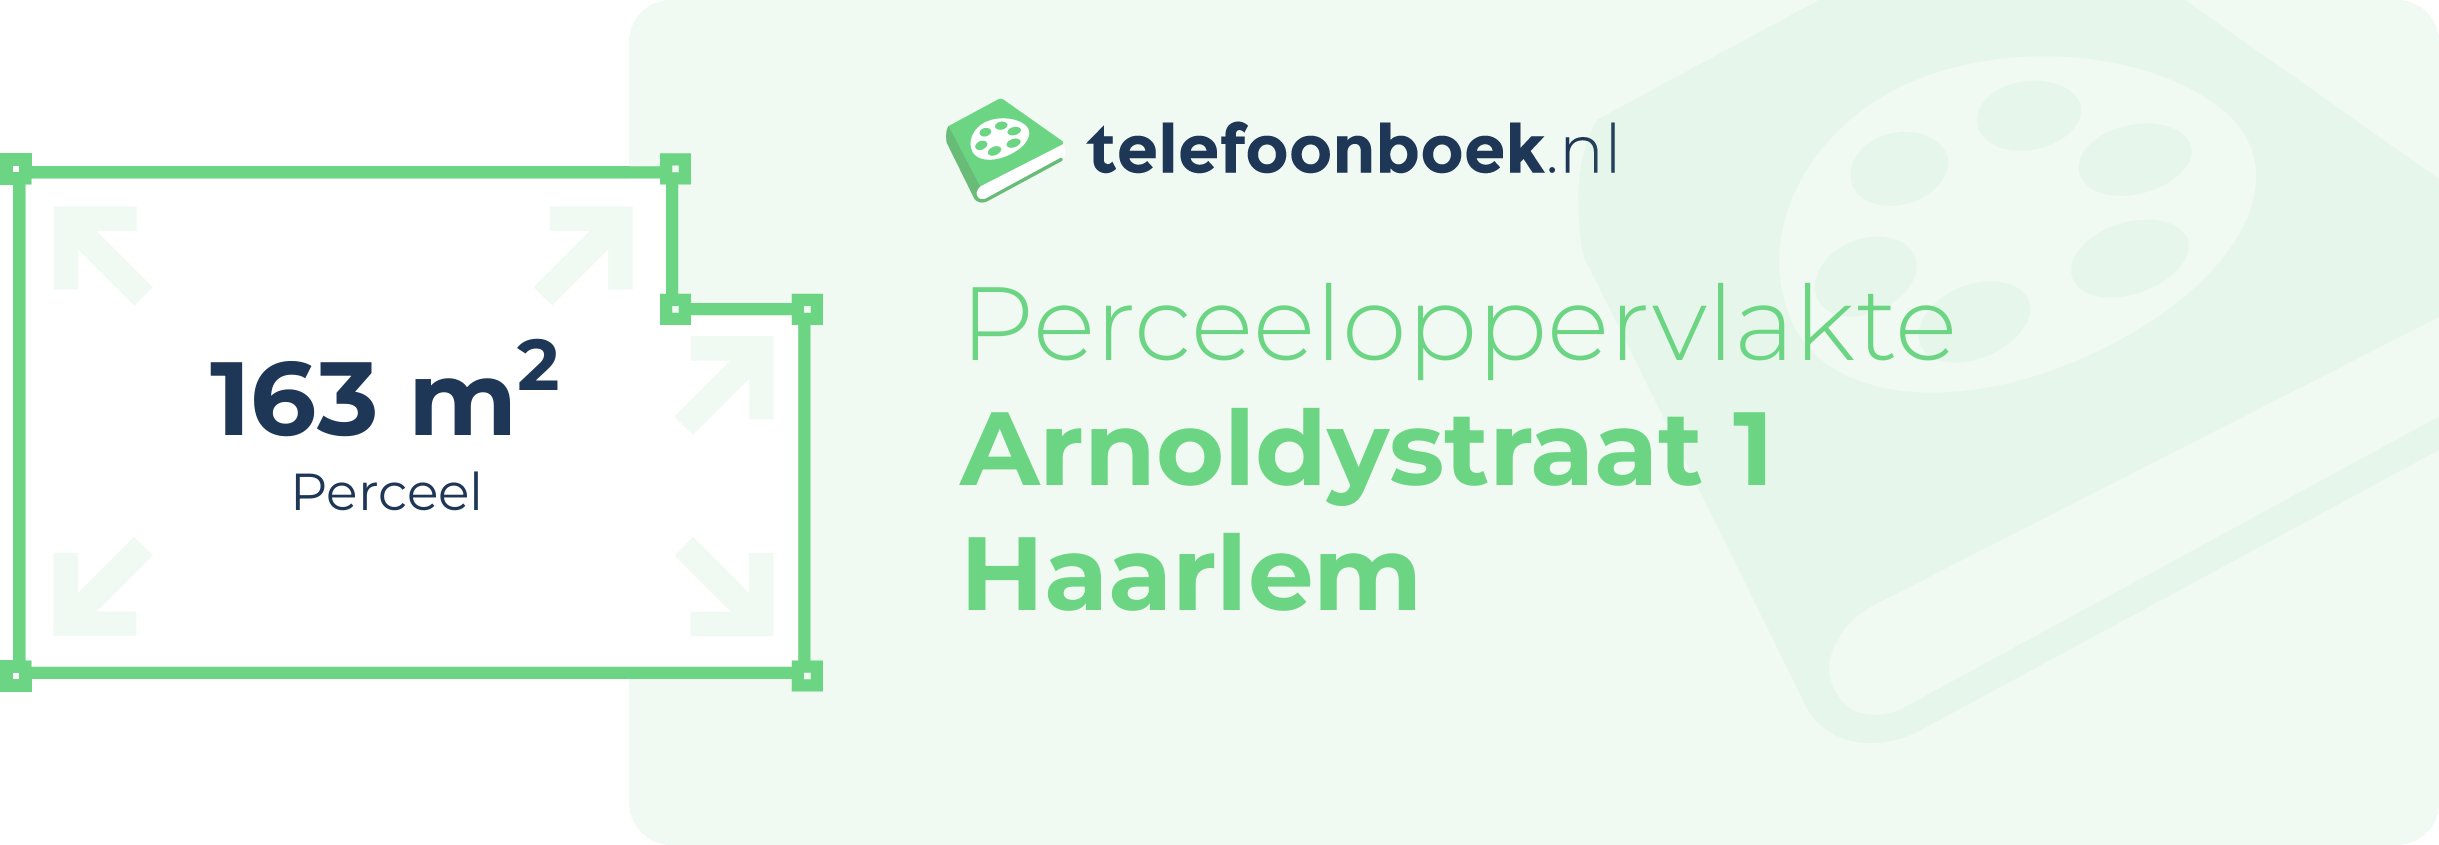 Perceeloppervlakte Arnoldystraat 1 Haarlem